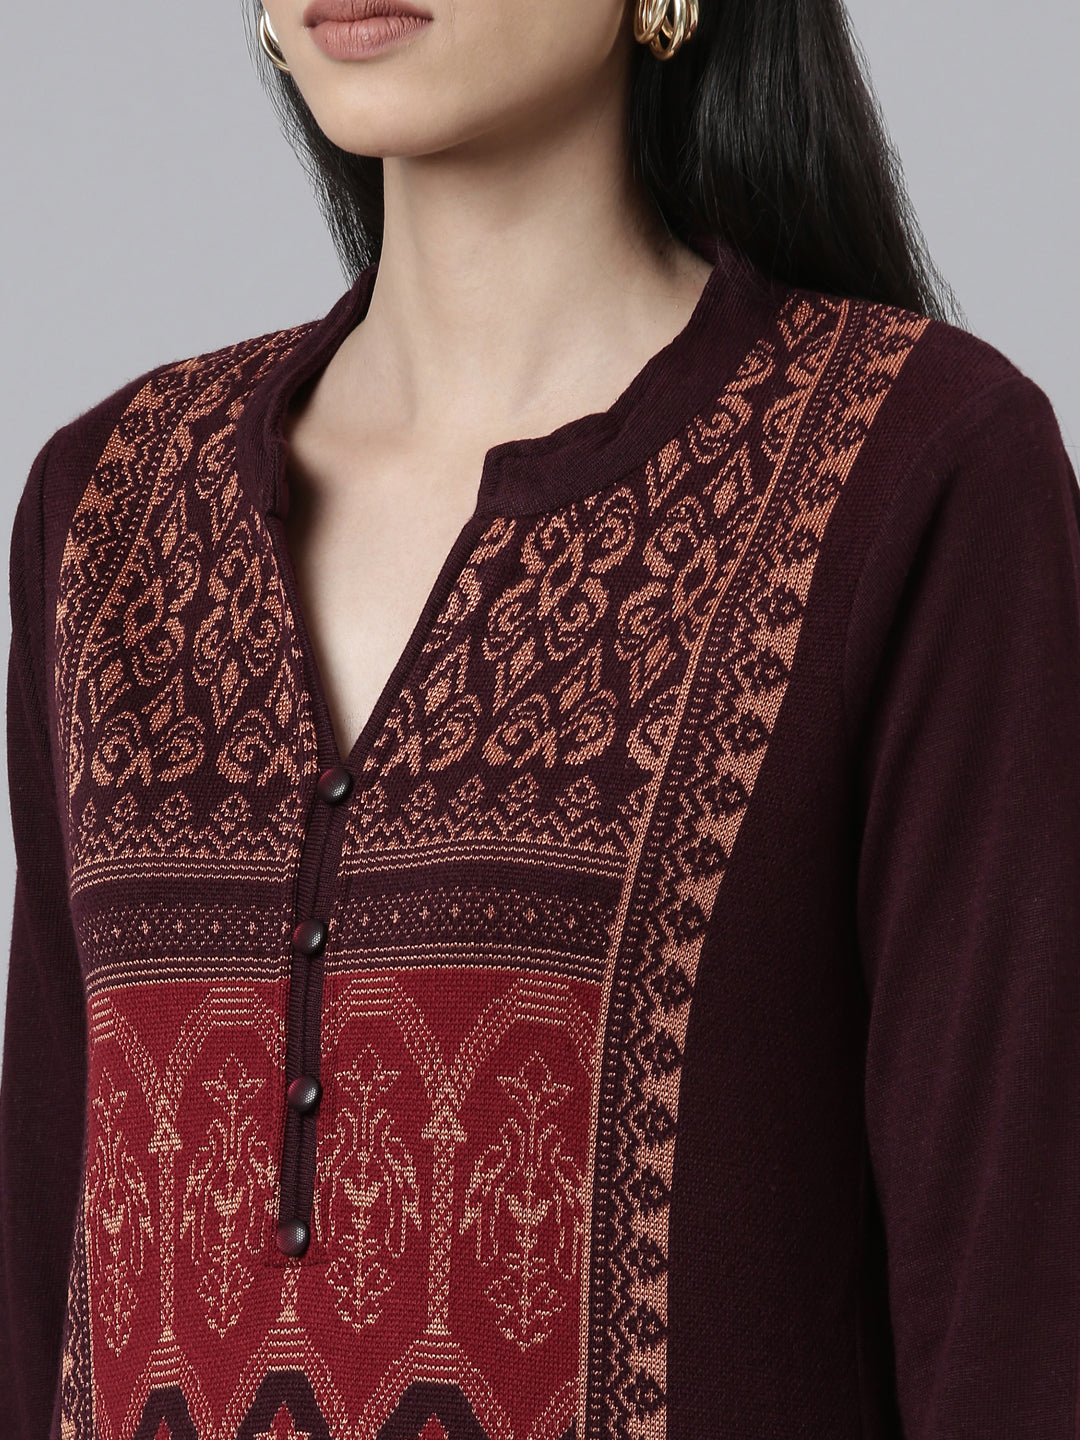 Neeru's Winter Wear Woven Design Acrylic Kurta For Women